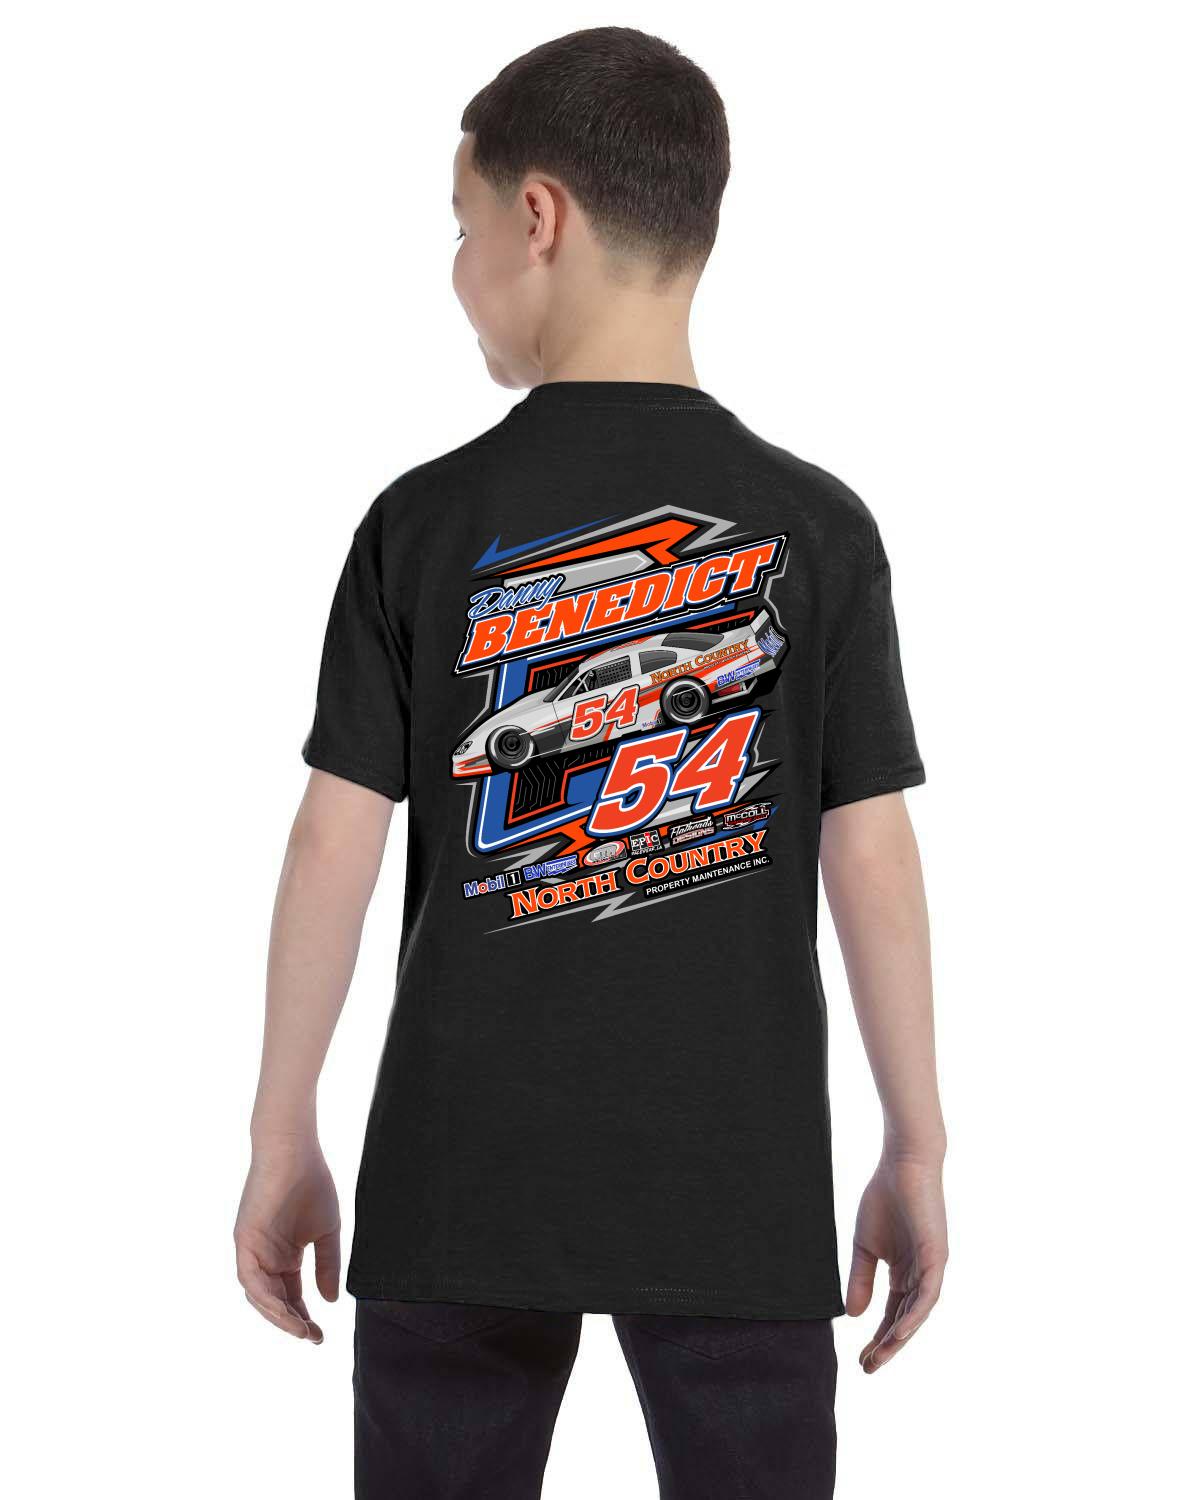 Danny Benedict Racing Youth T-Shirt